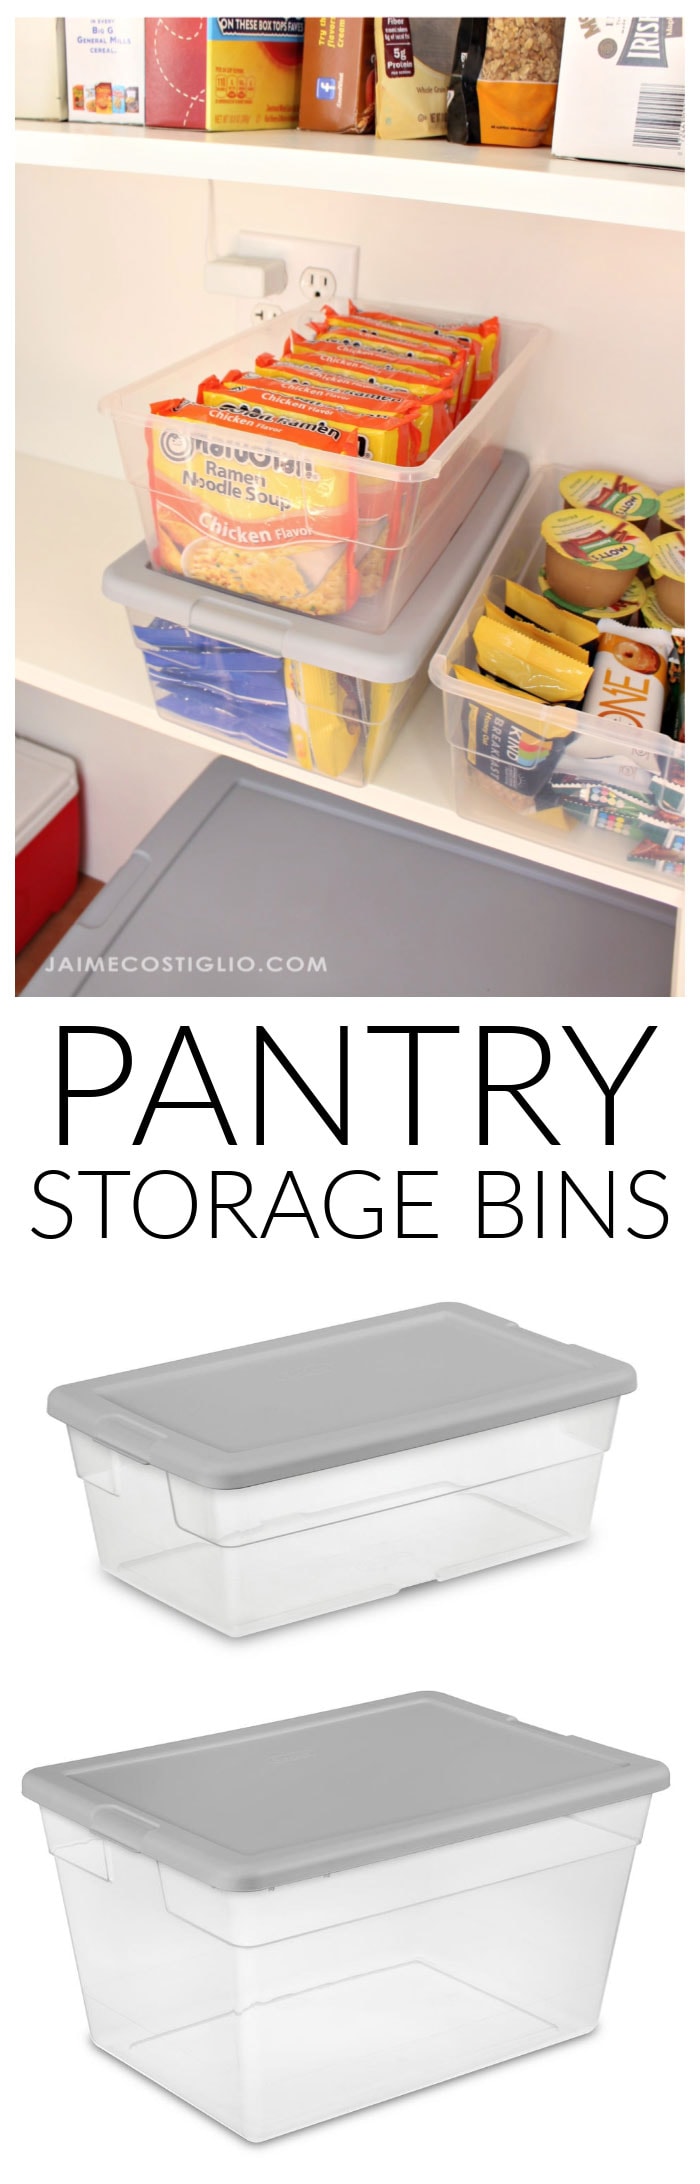 pantry storage bin options